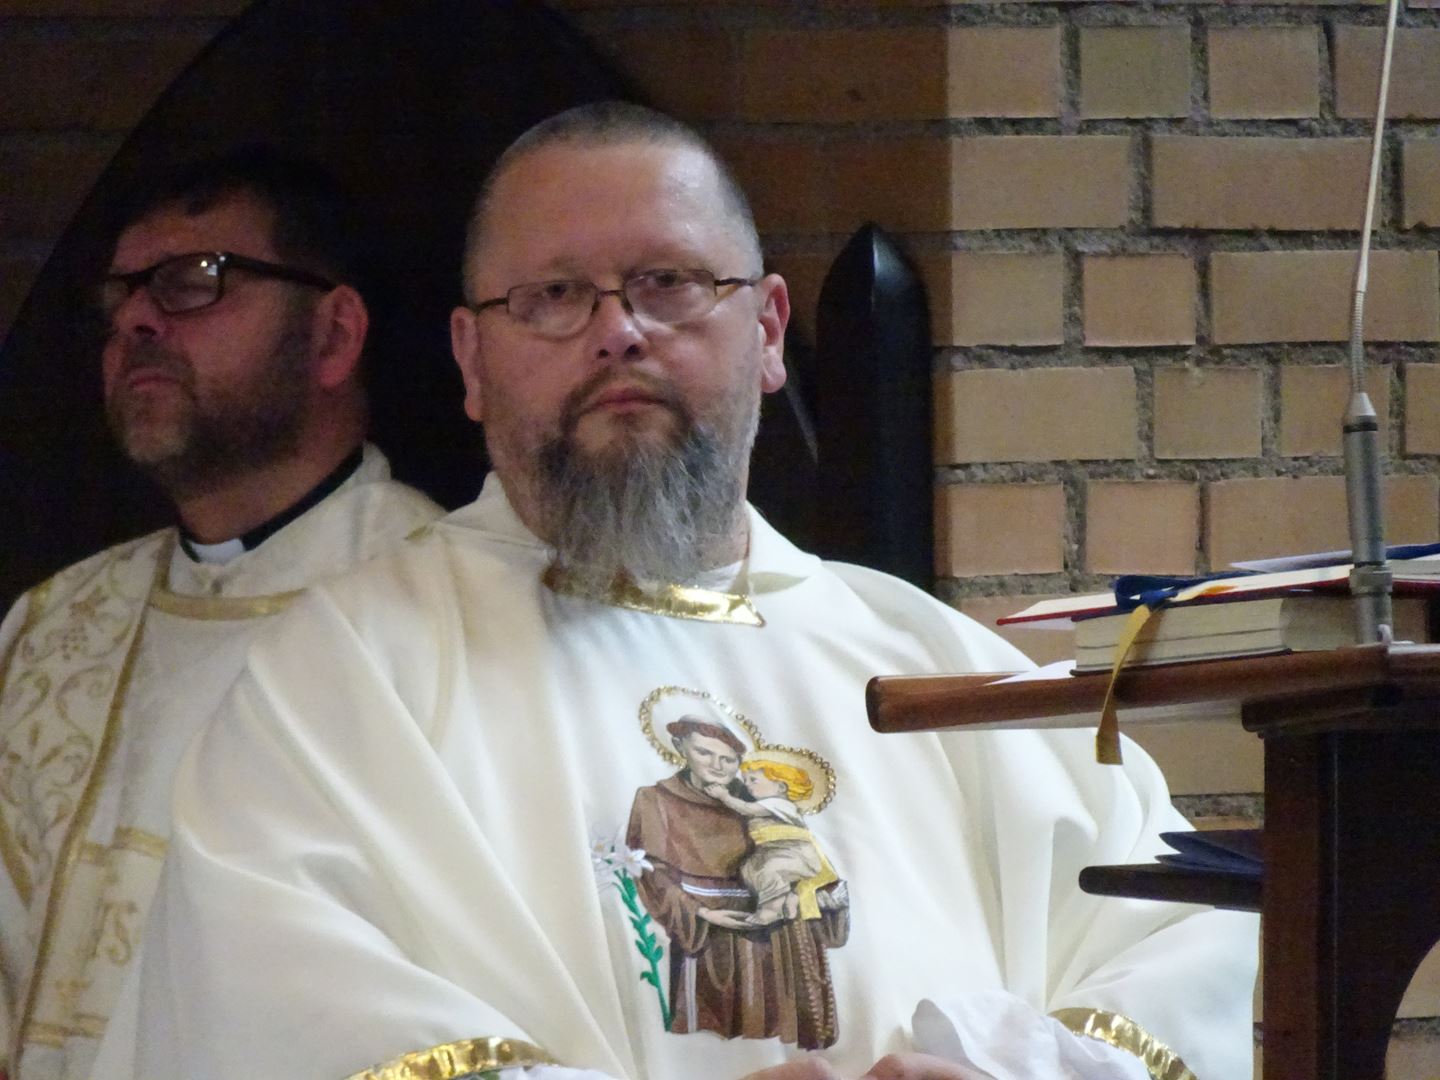 Pater Wladek Mezyks 25-årsjubileum som präst. Jönköping 13 juni 2020